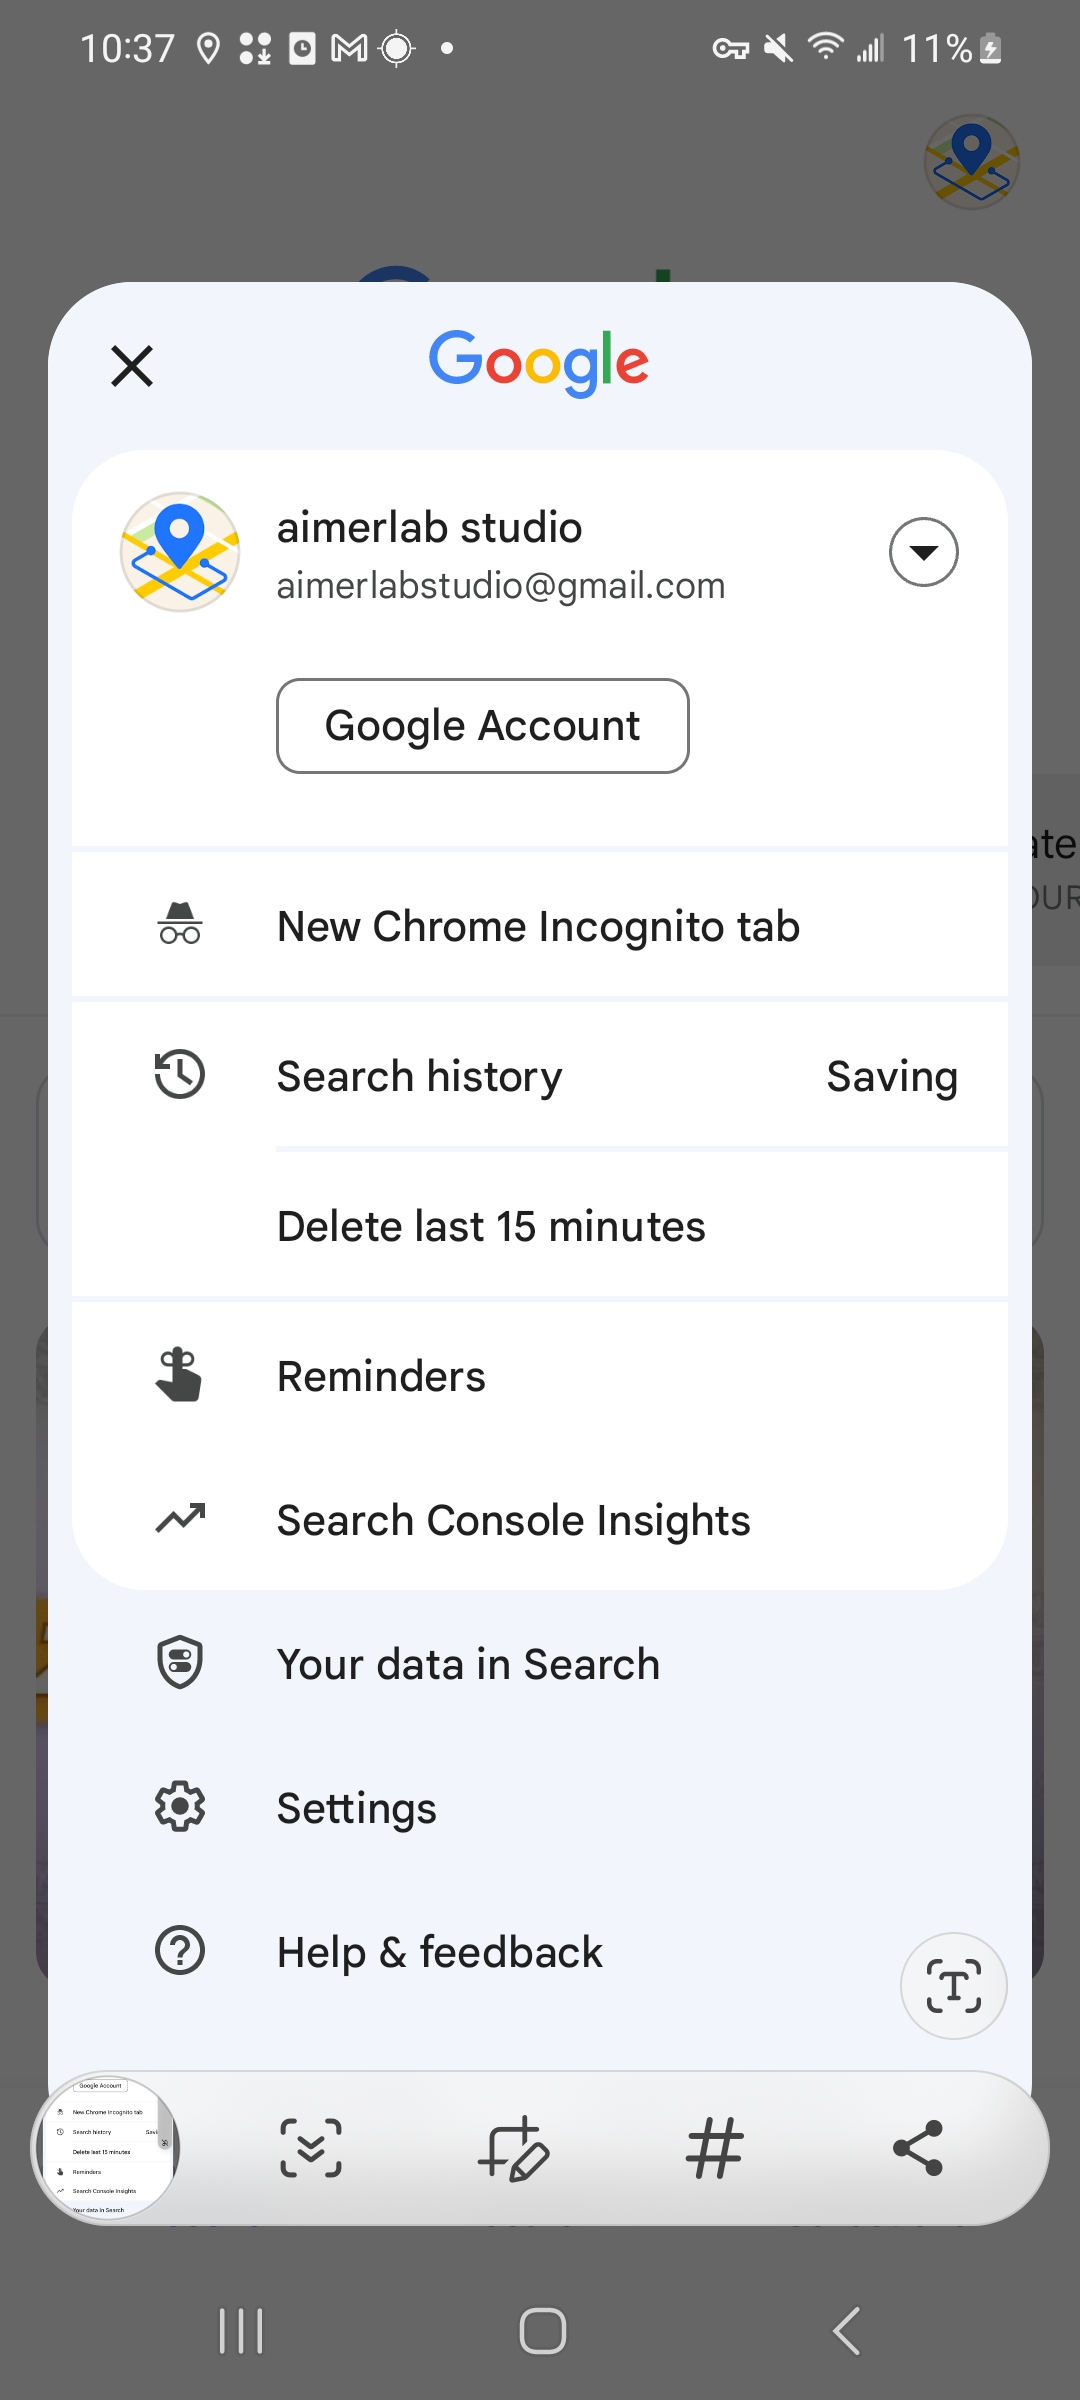 Open Google Account Settings